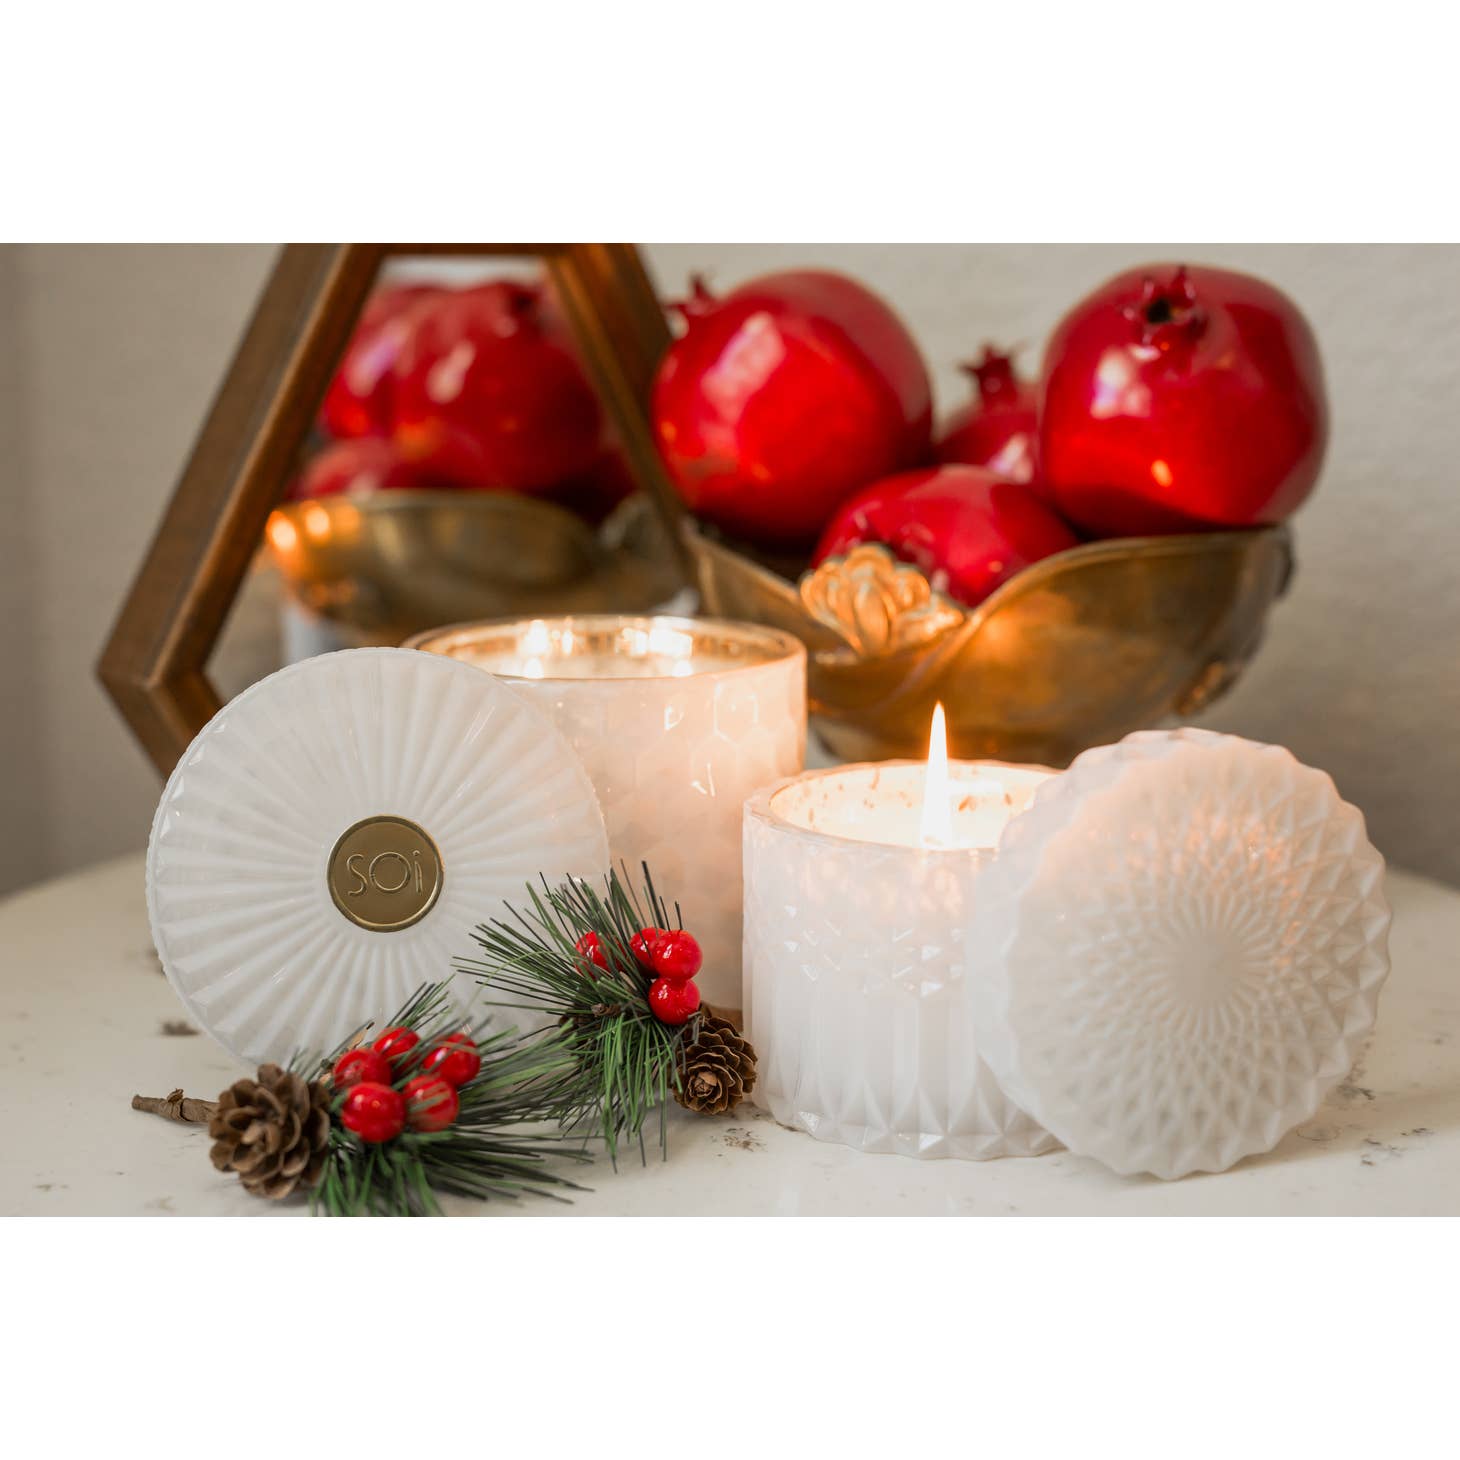 SOi Company: Winter Wonderland 15oz Shimmer Candle (White)